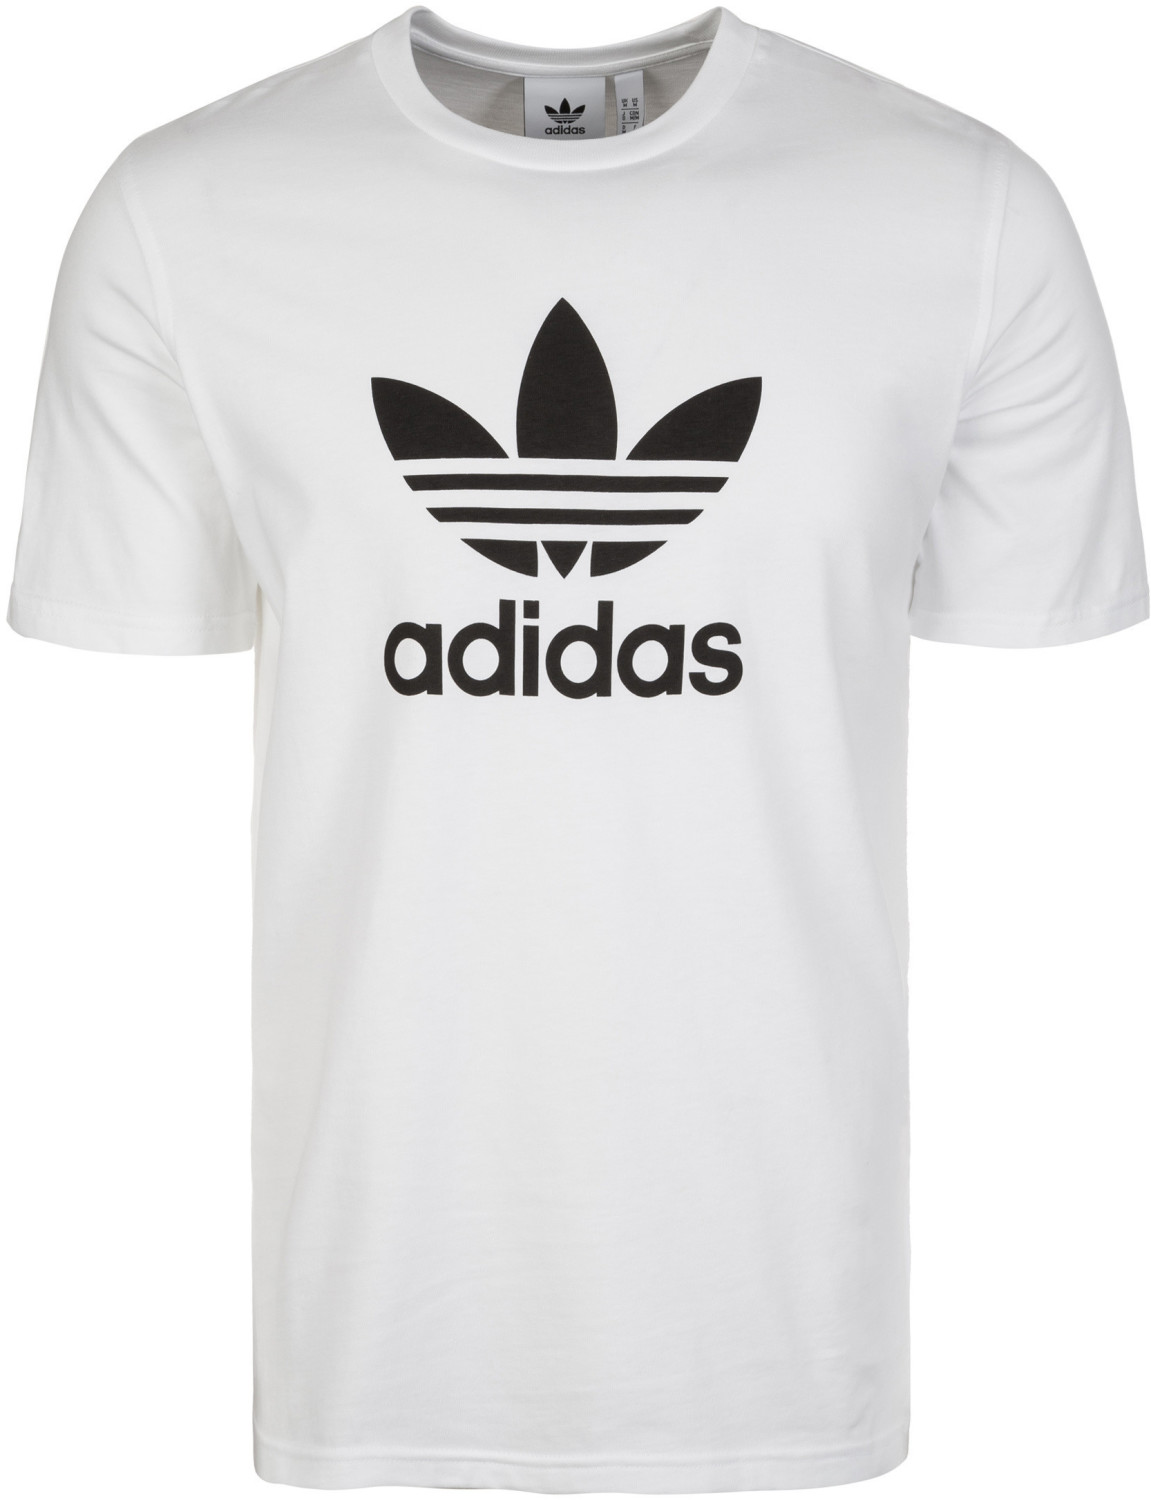 Adidas Originals Trefoil T-Shirt white